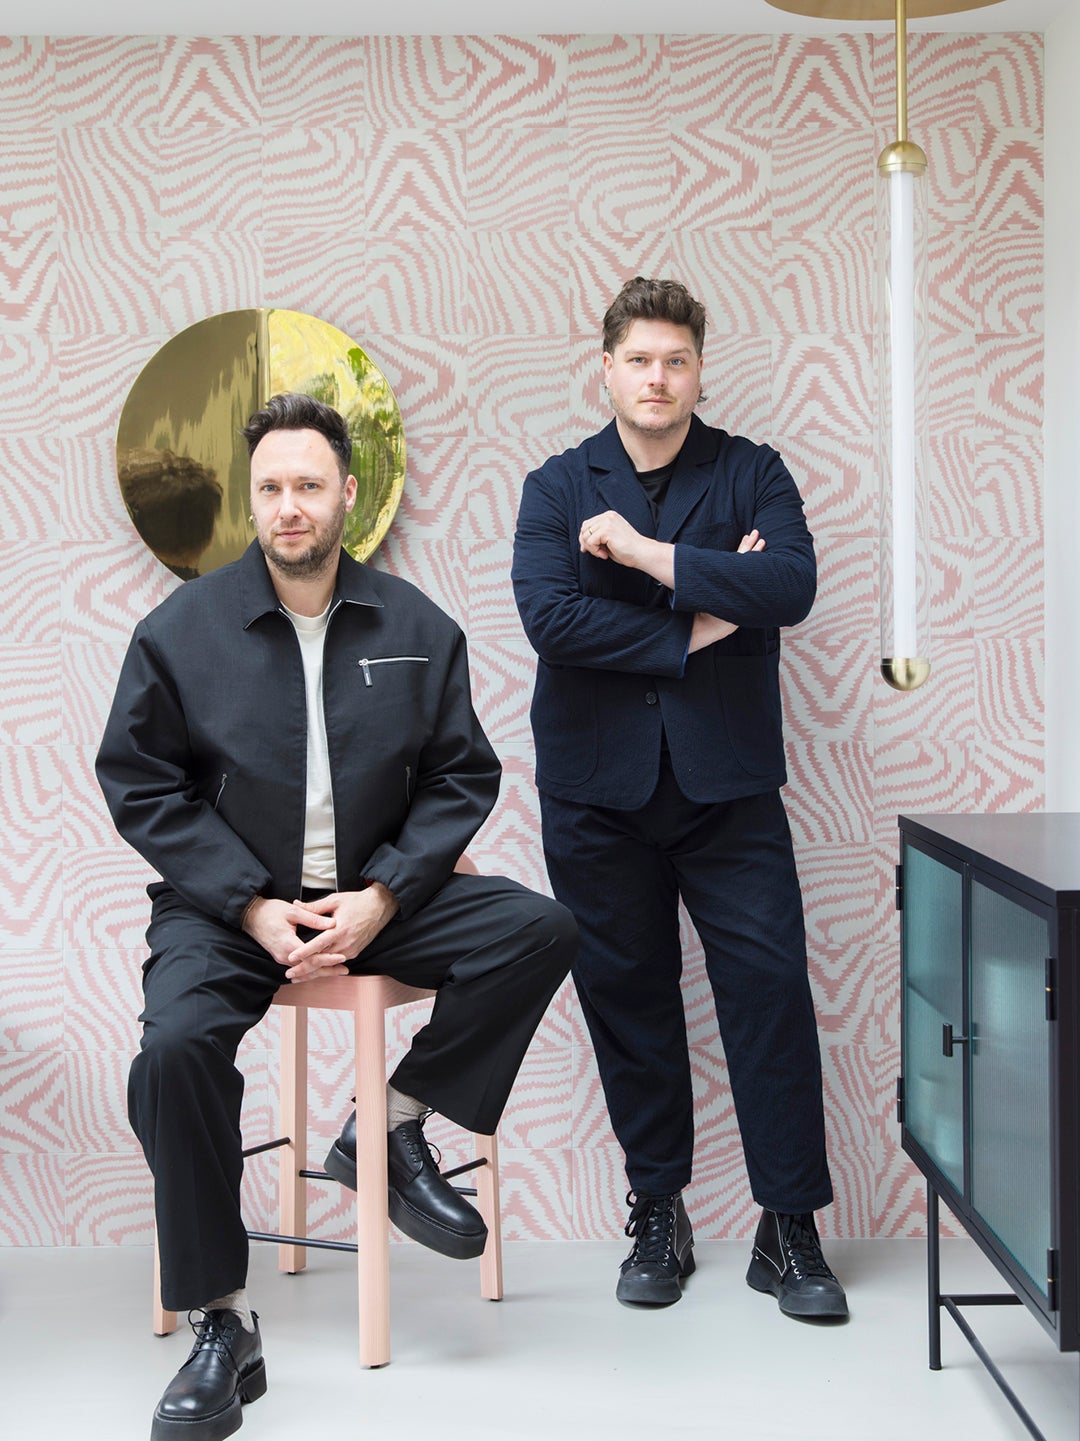 Portrait of 2LG founders Jordan Cluroe and Russel Whitehead behind pink tiled wall. 